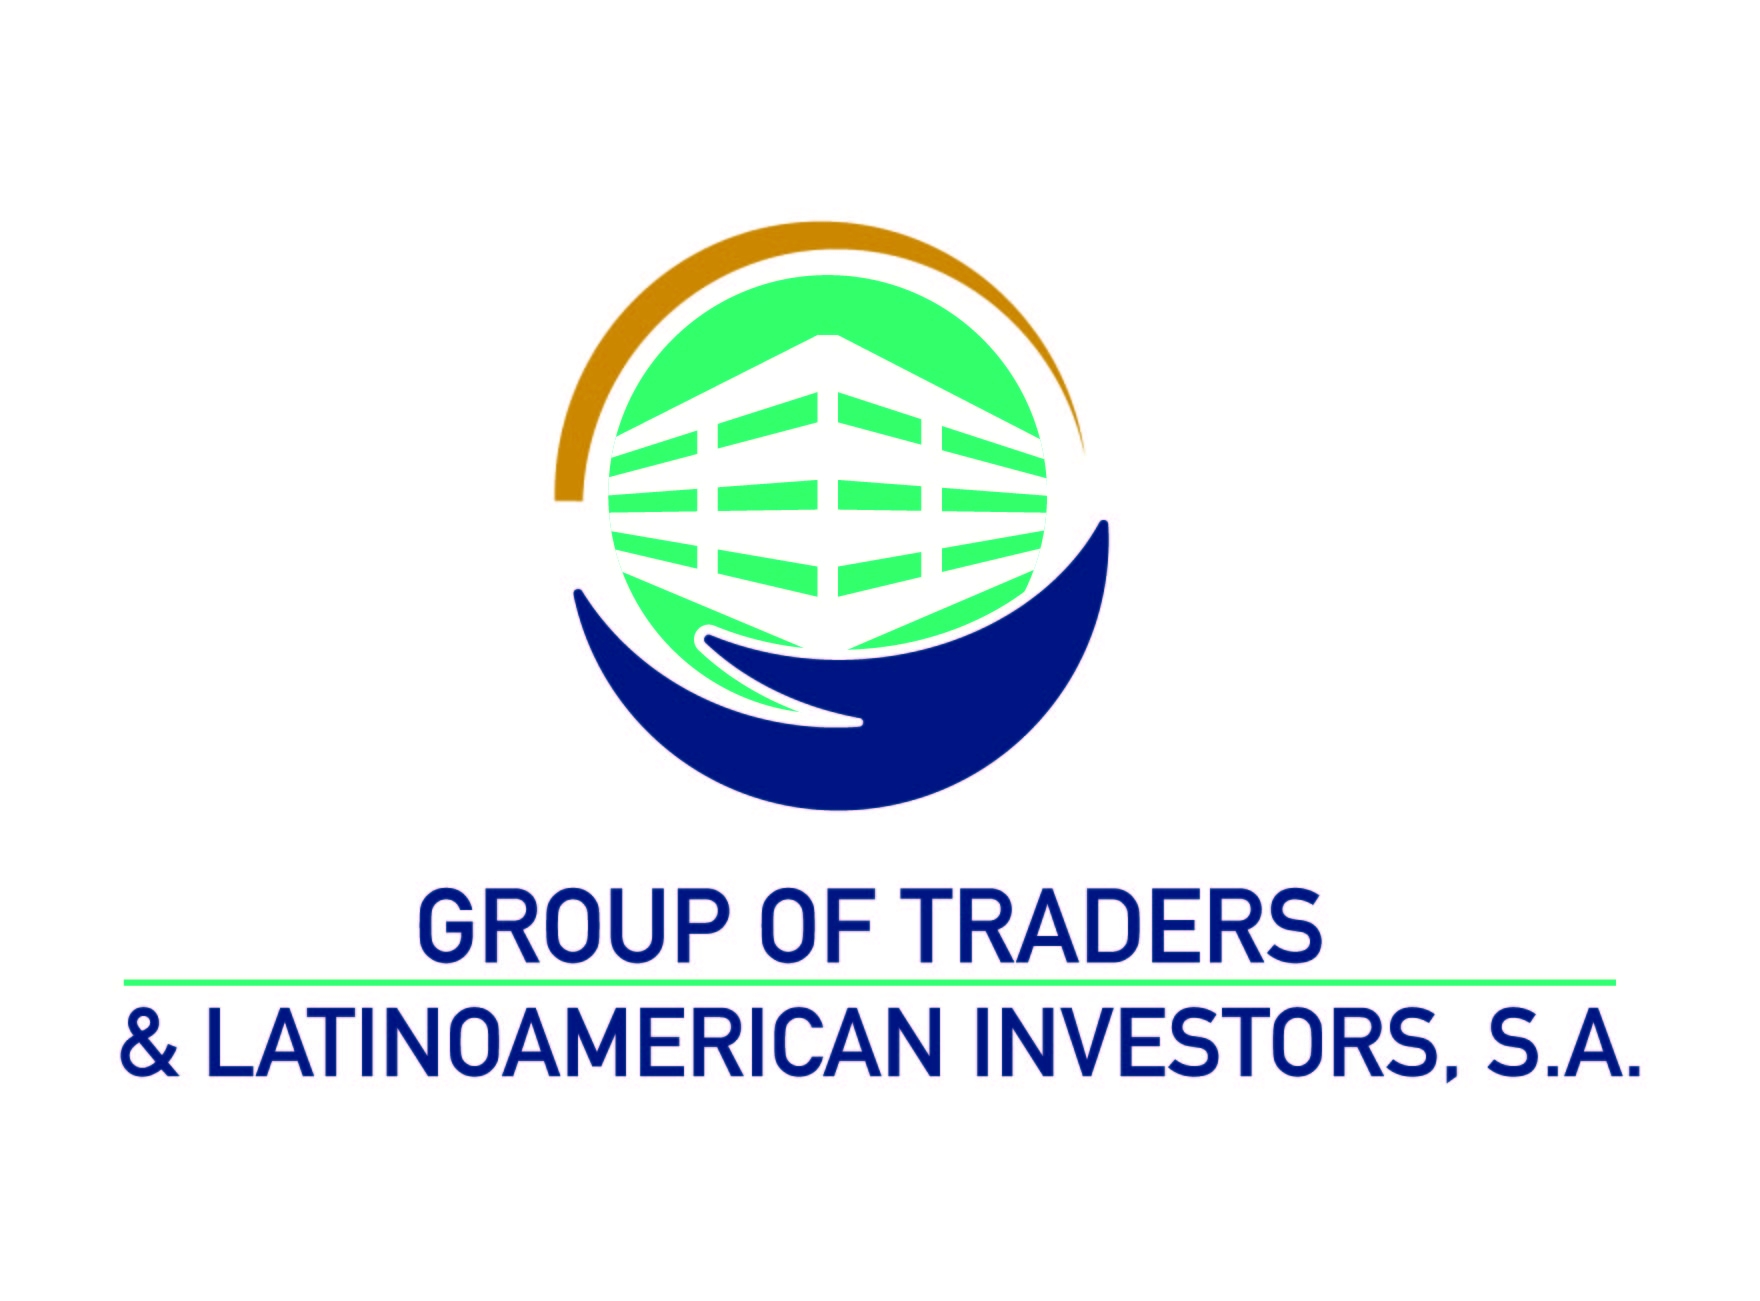 Groups of Traders & Latinoamerican Investors